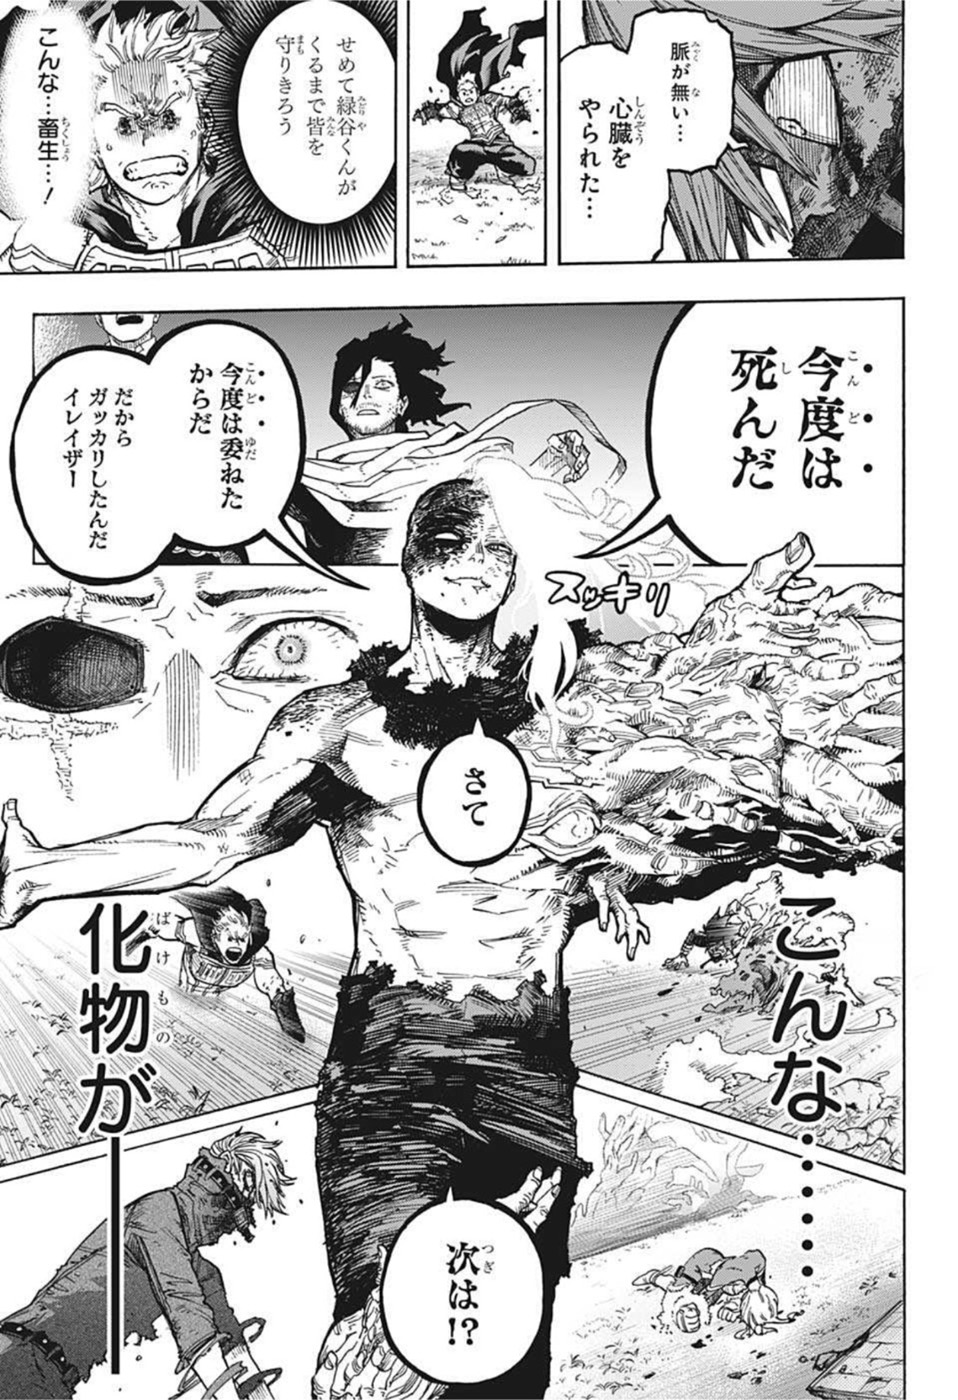 Boku no Hero Academia - Chapter 363 - Page 3